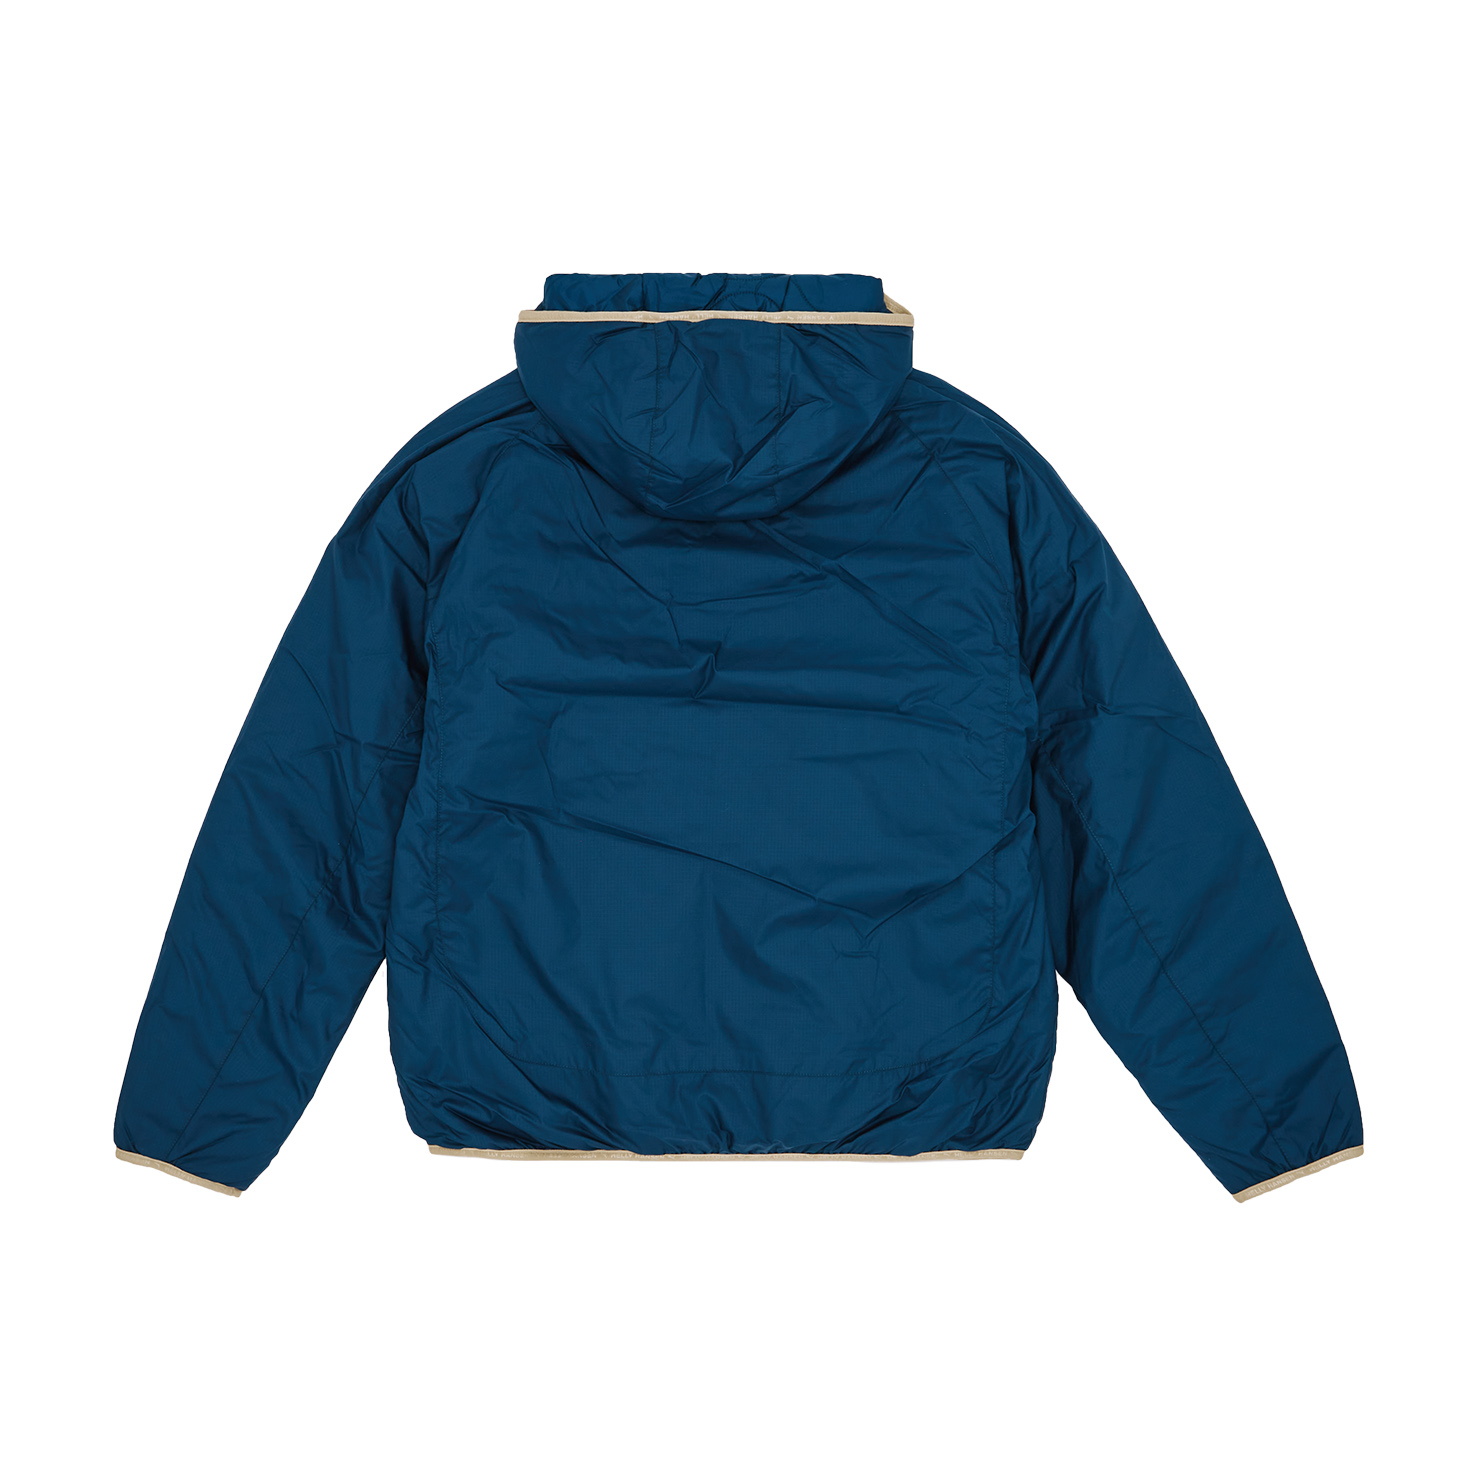 PUMA x HELLY HANSEN Rev. Padded Jacket S PUMA, размер 46-48, цвет синий PM532841 - фото 2